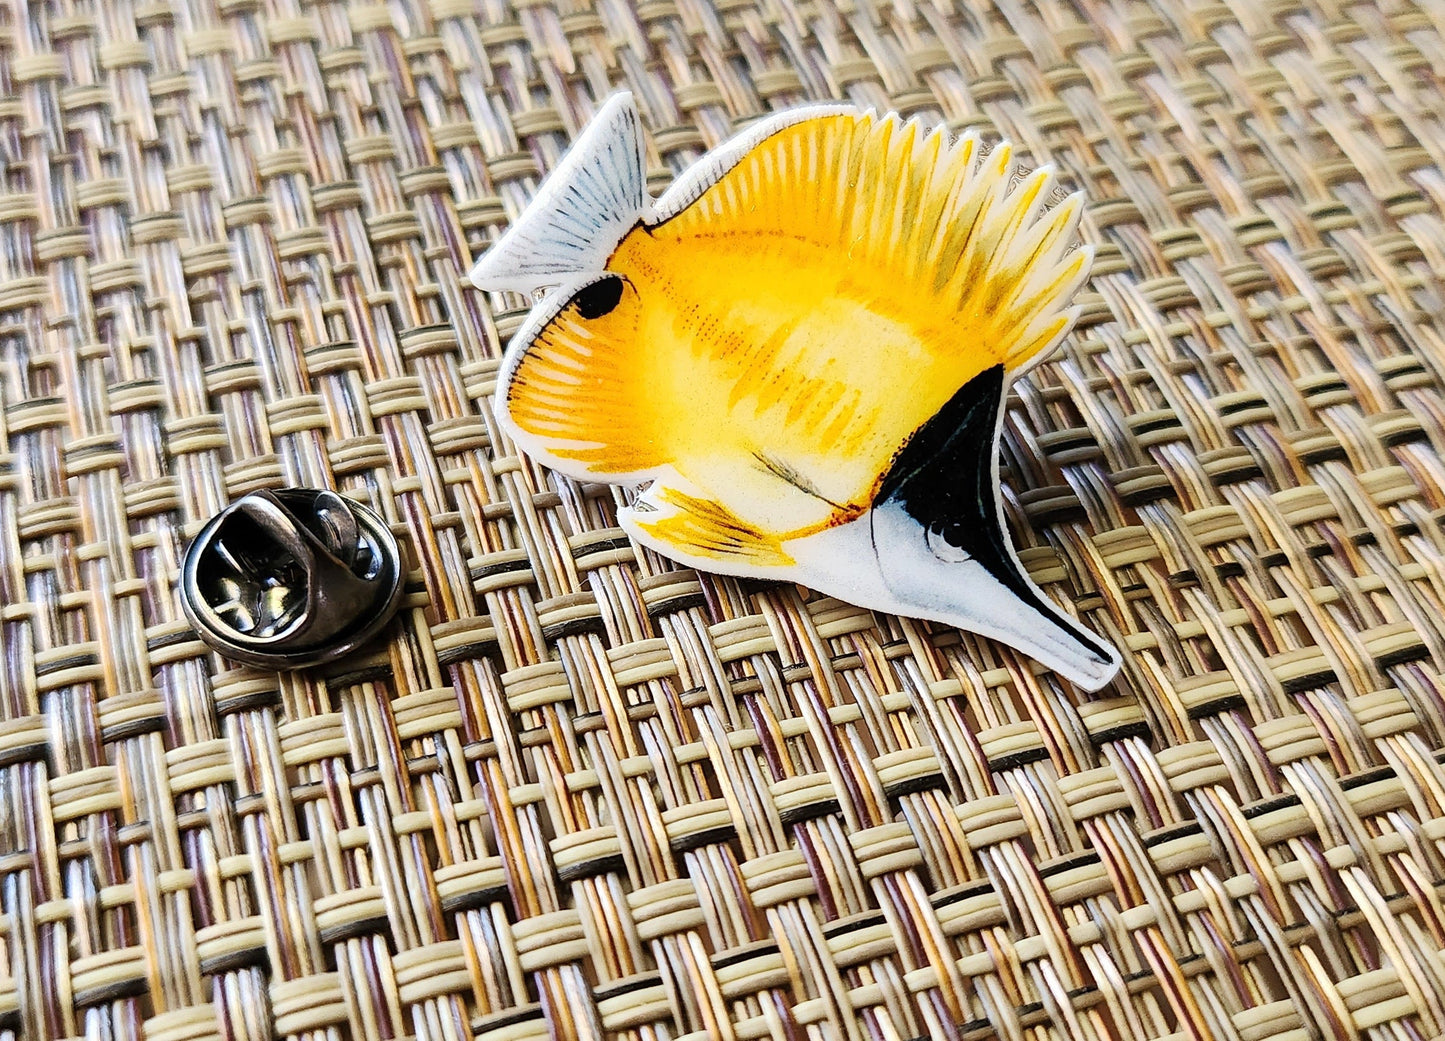 Yellow Longnose Butterflyfish - Resin Coated Polystyrene Pin - 100% Handmade Fish Pin, Forceps Butterflyfish